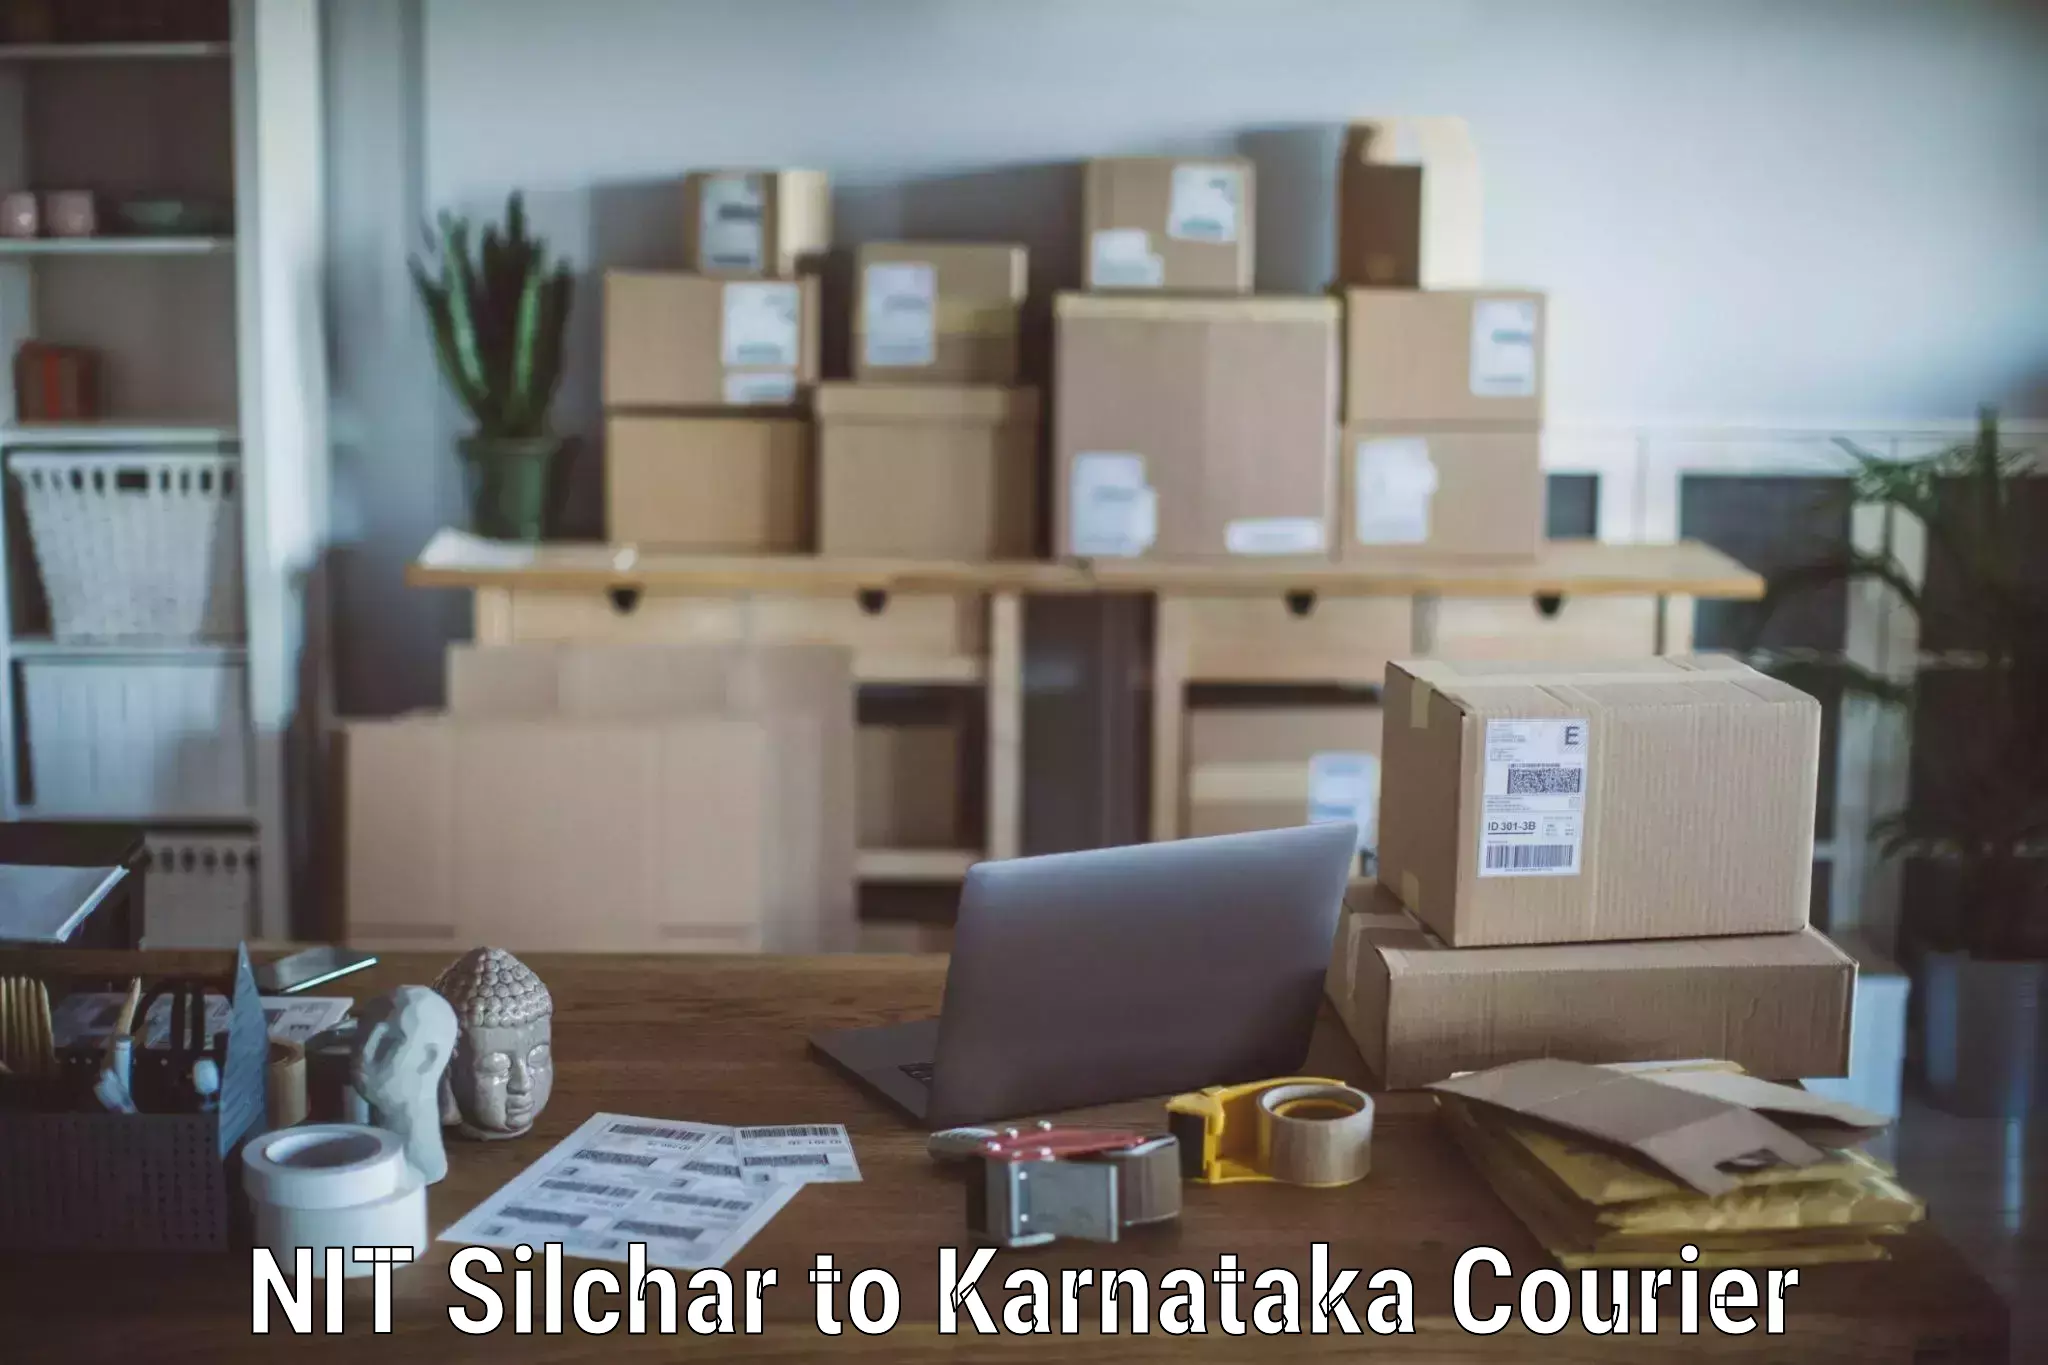 Budget-friendly moving services NIT Silchar to Karnataka